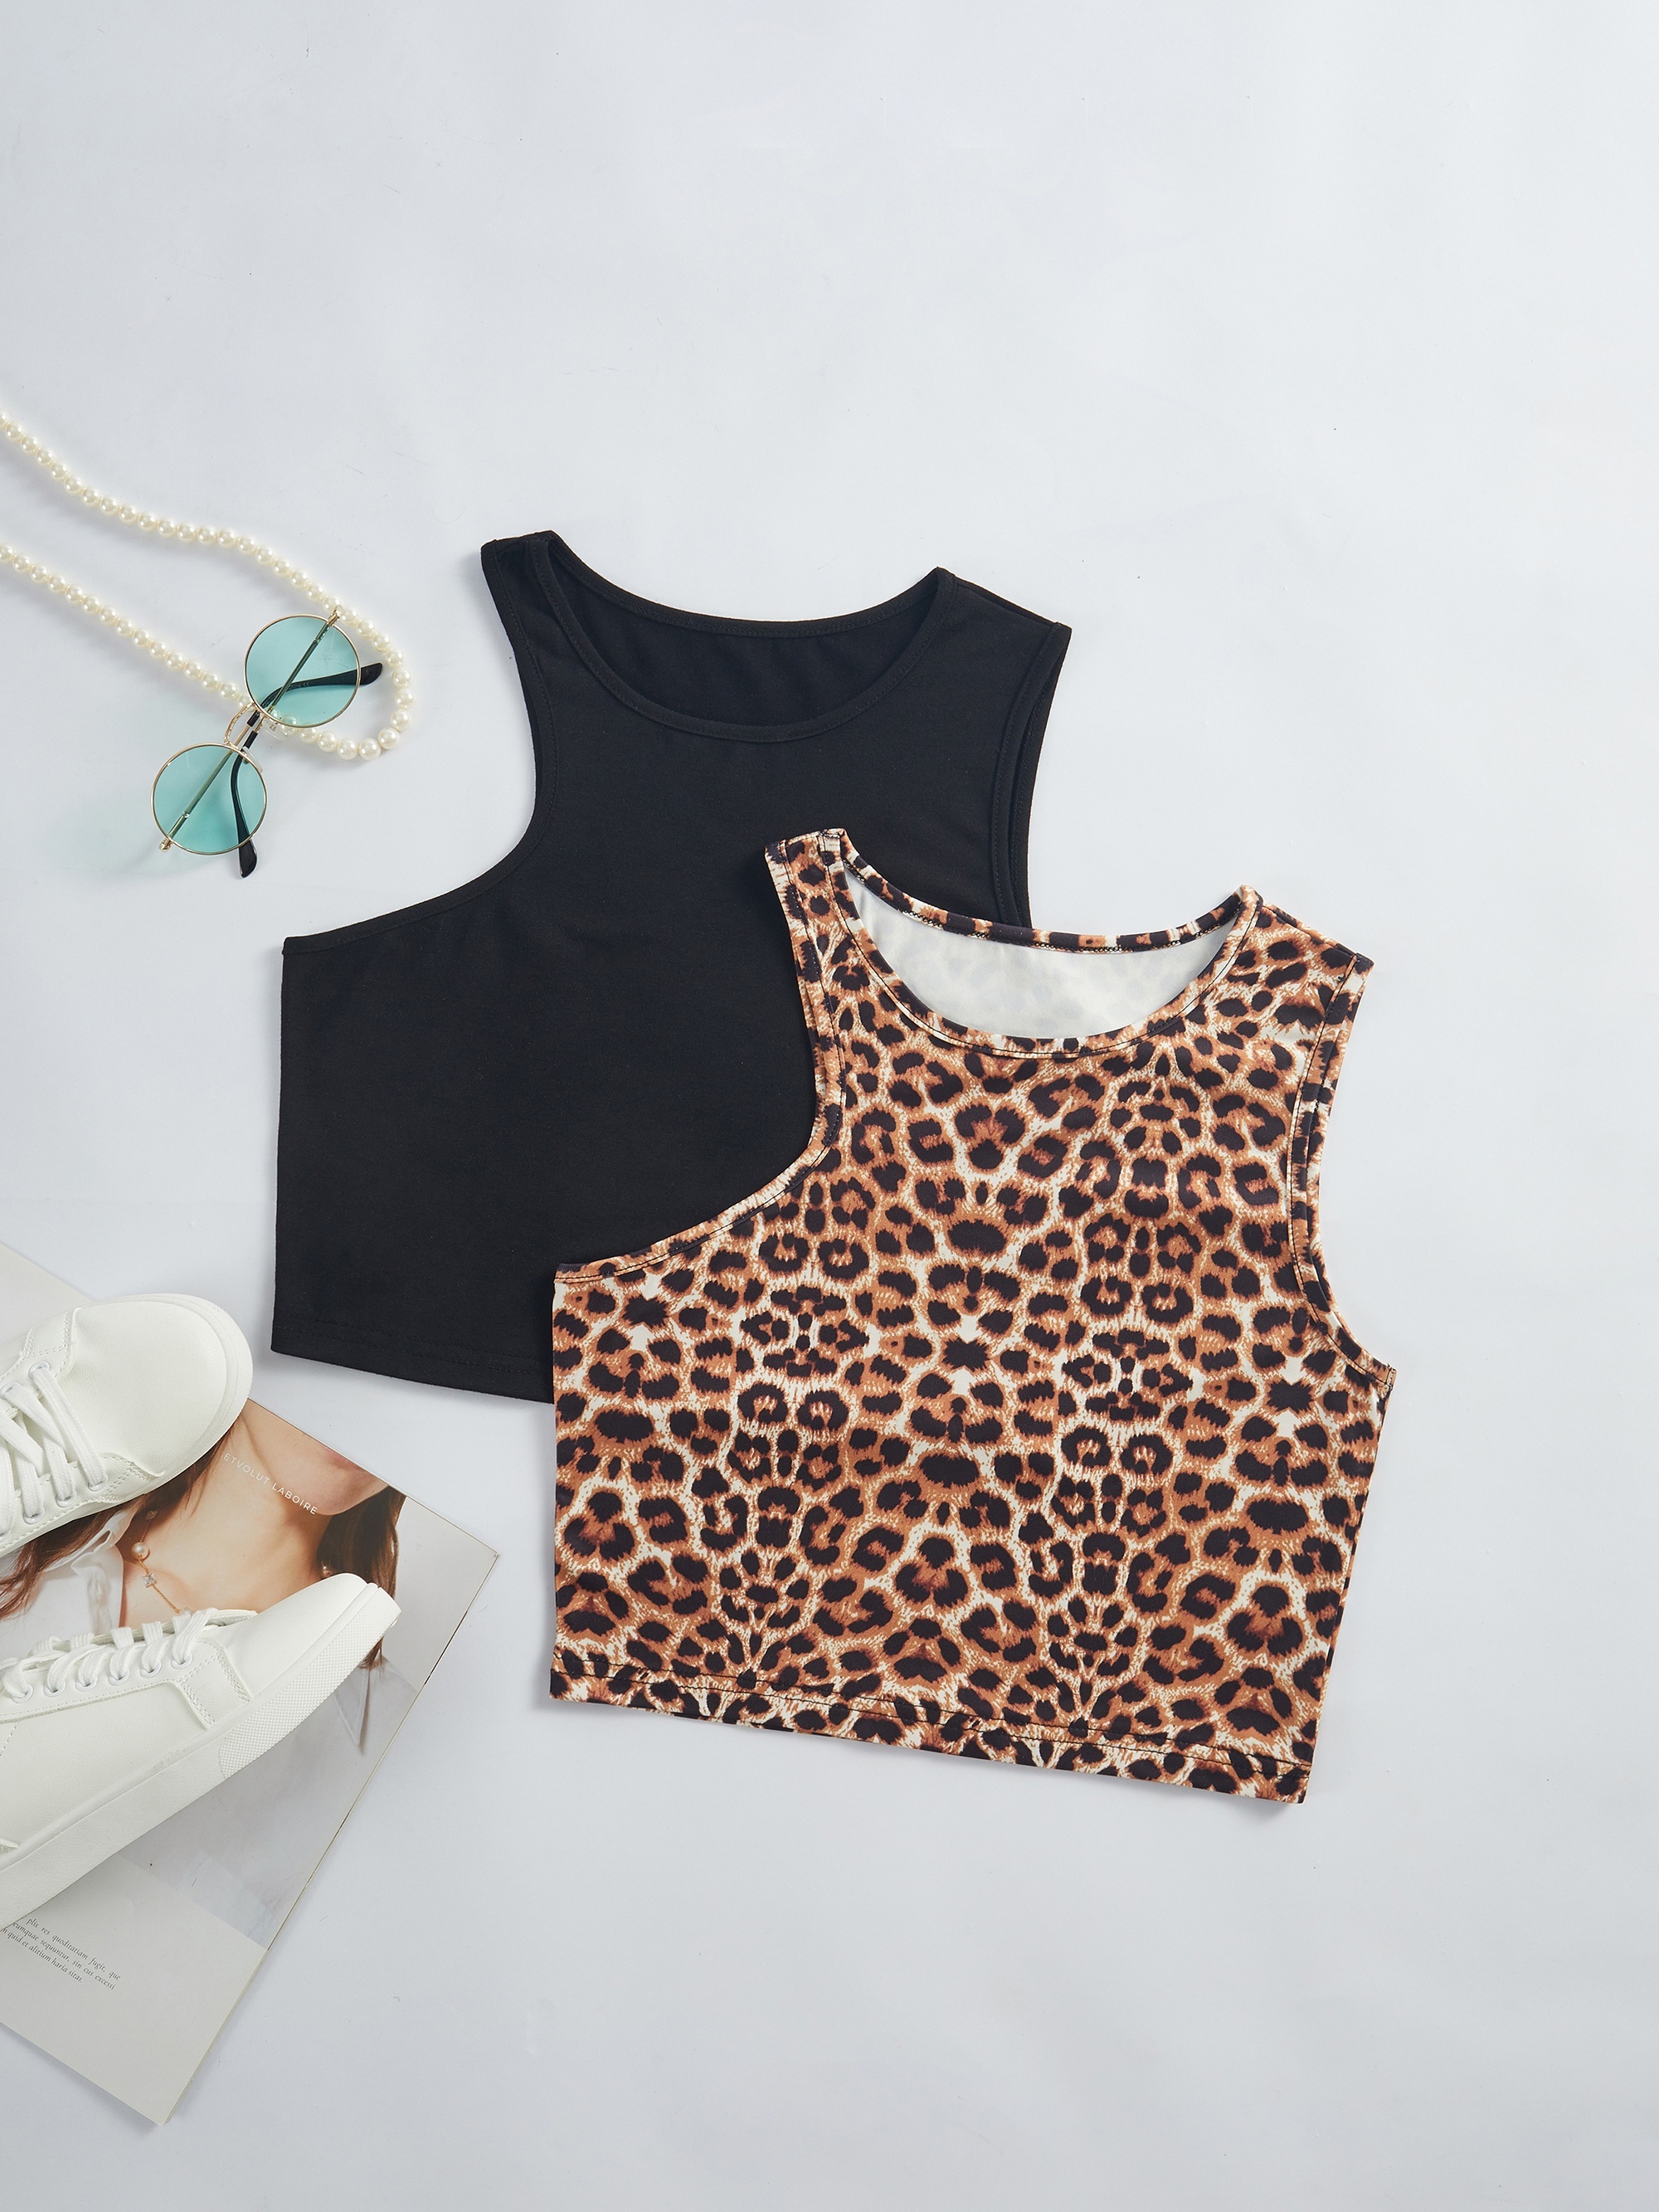 Ladies Leopard Print Halter Tops Tank Sleeveless Shirts Summer Blouse